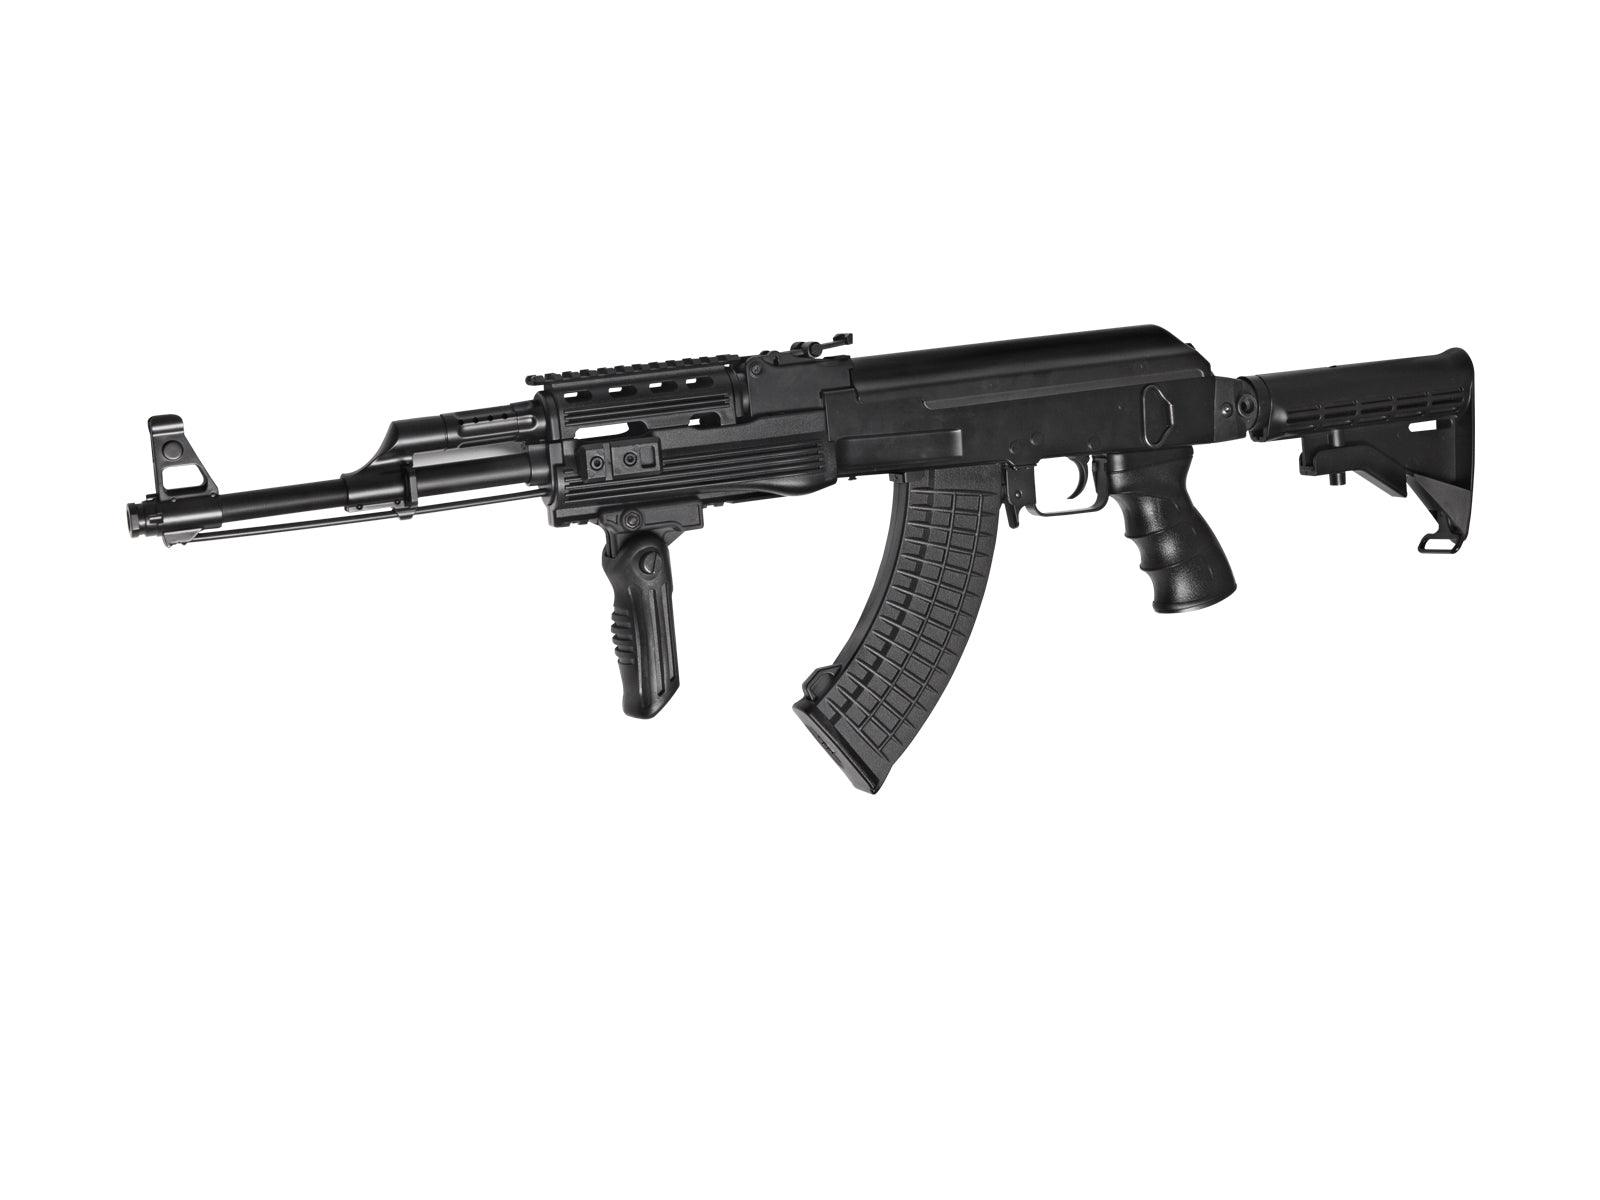 First airsoft for postapoc larp - Arsenal SA M7 AK47 : r/airsoft